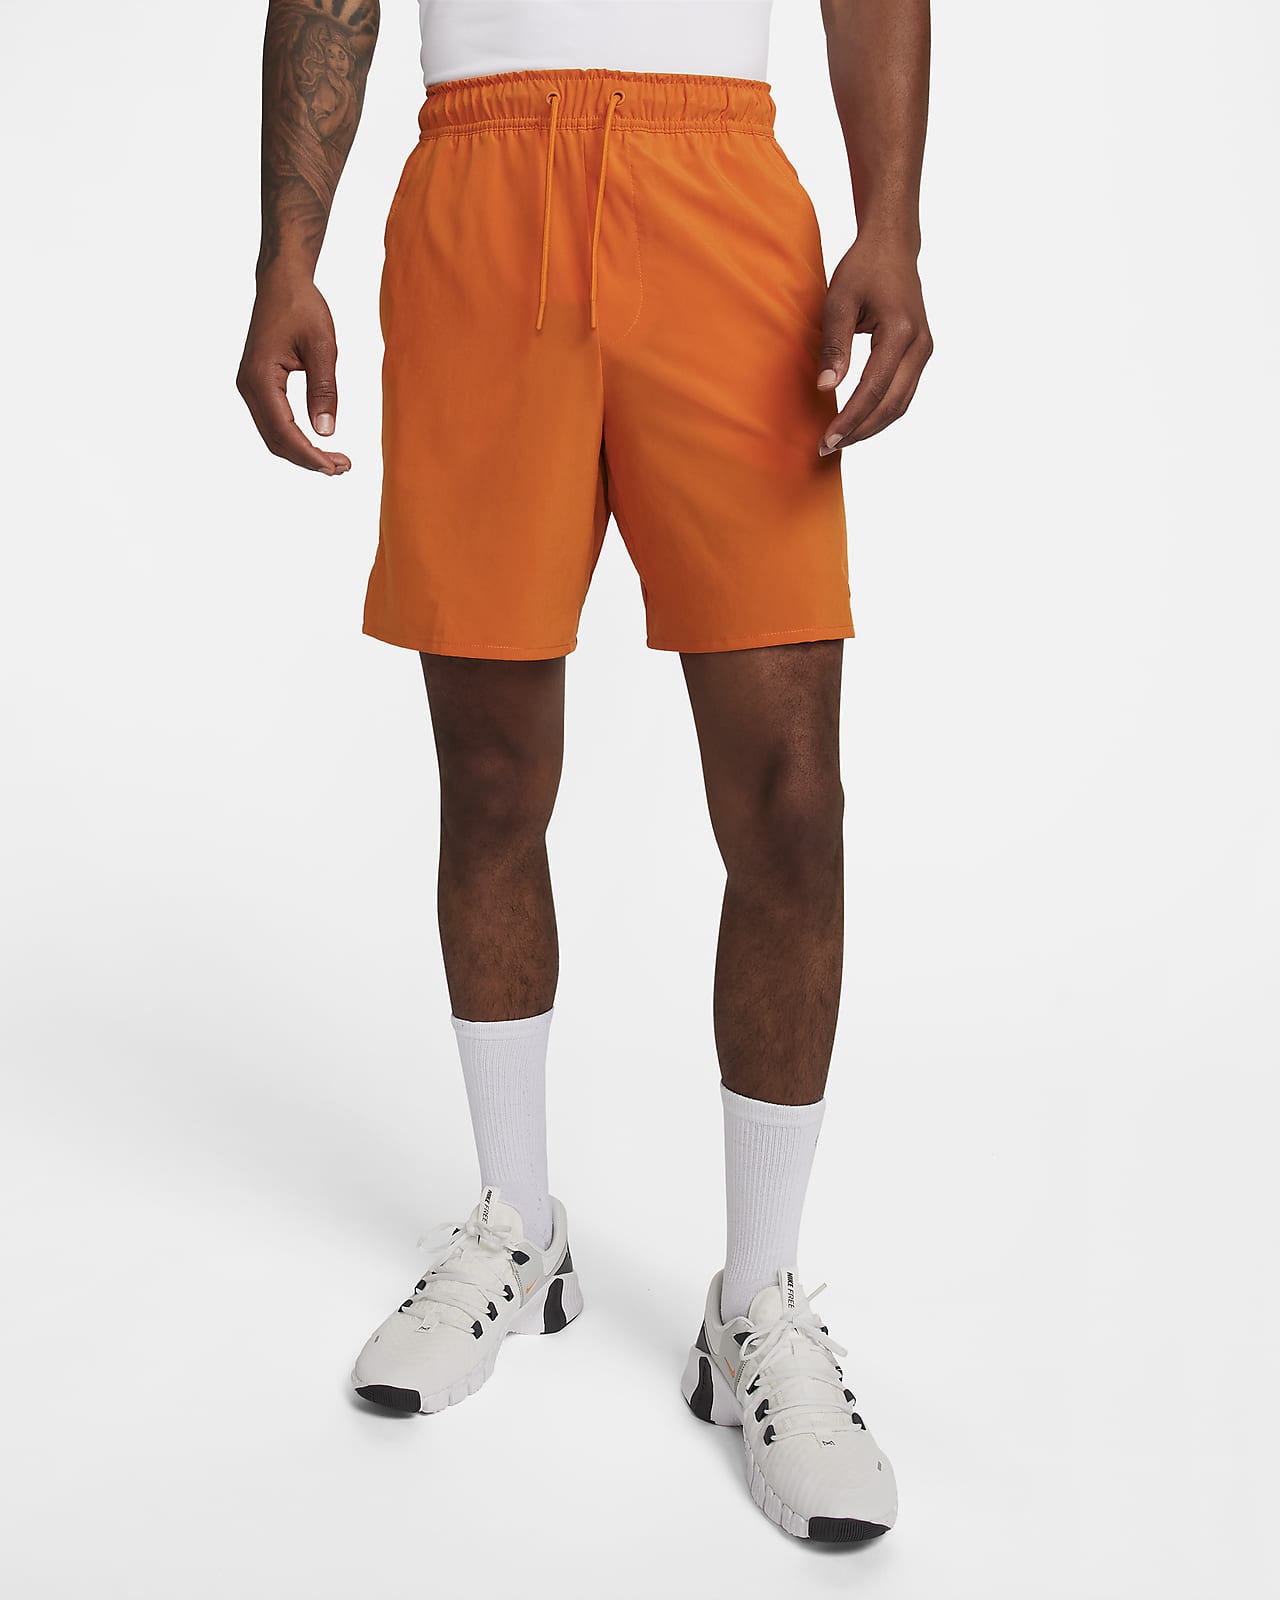 Nike Unlimited vielseitige Dri-FIT Herrenshorts ohne Futter (ca. 18 cm)